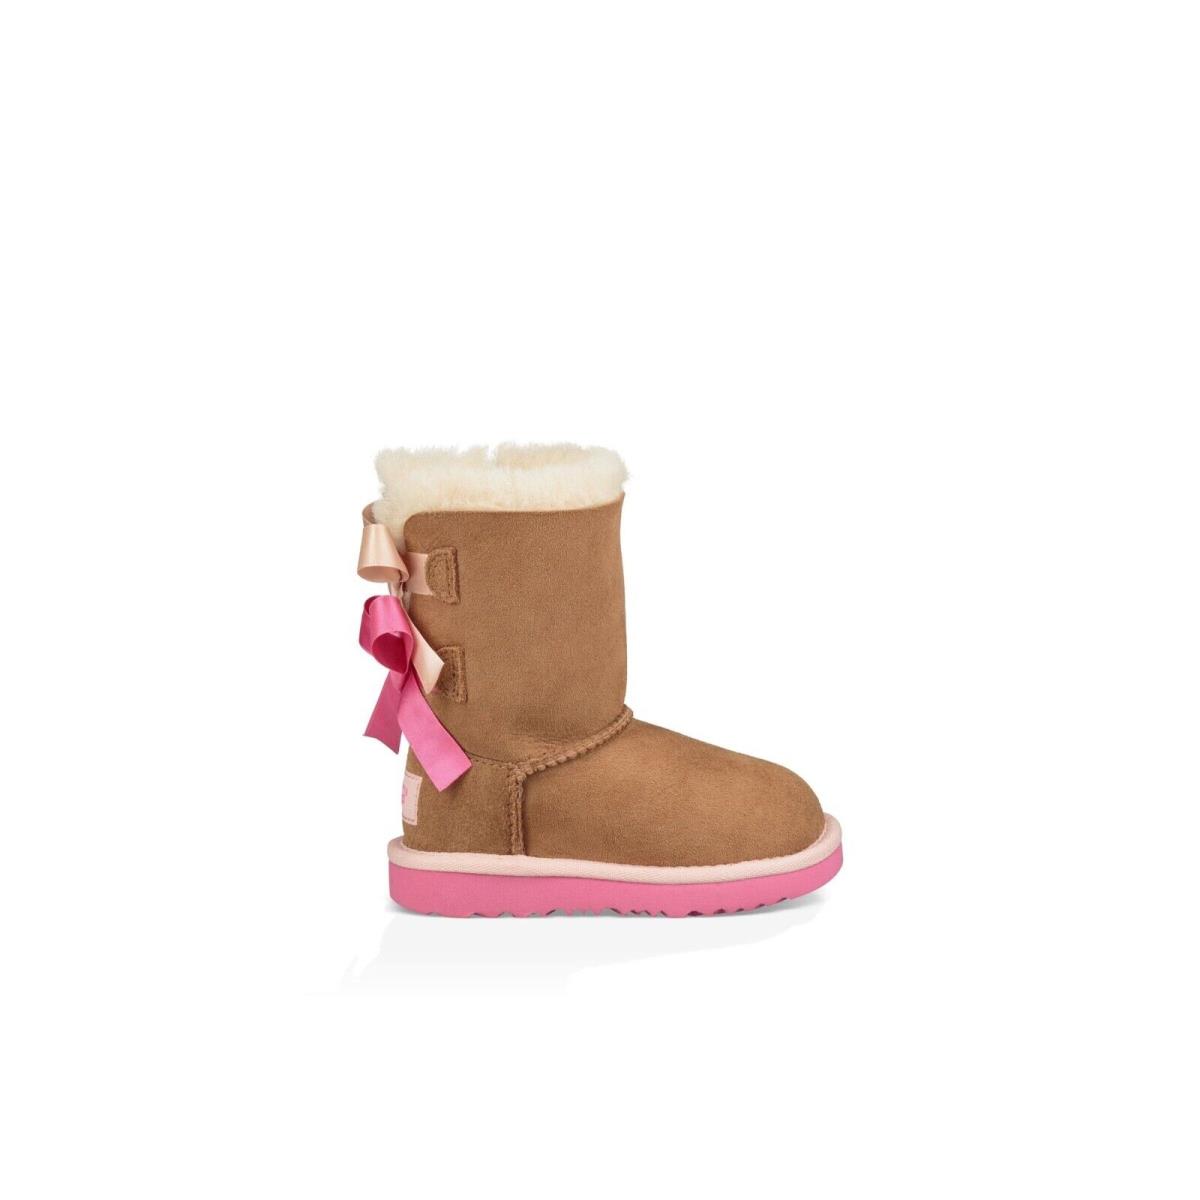 Ugg Toddler Bailey Bow II - Chestnut/pink - 1017394T - sz 8 - Chestnut Pink